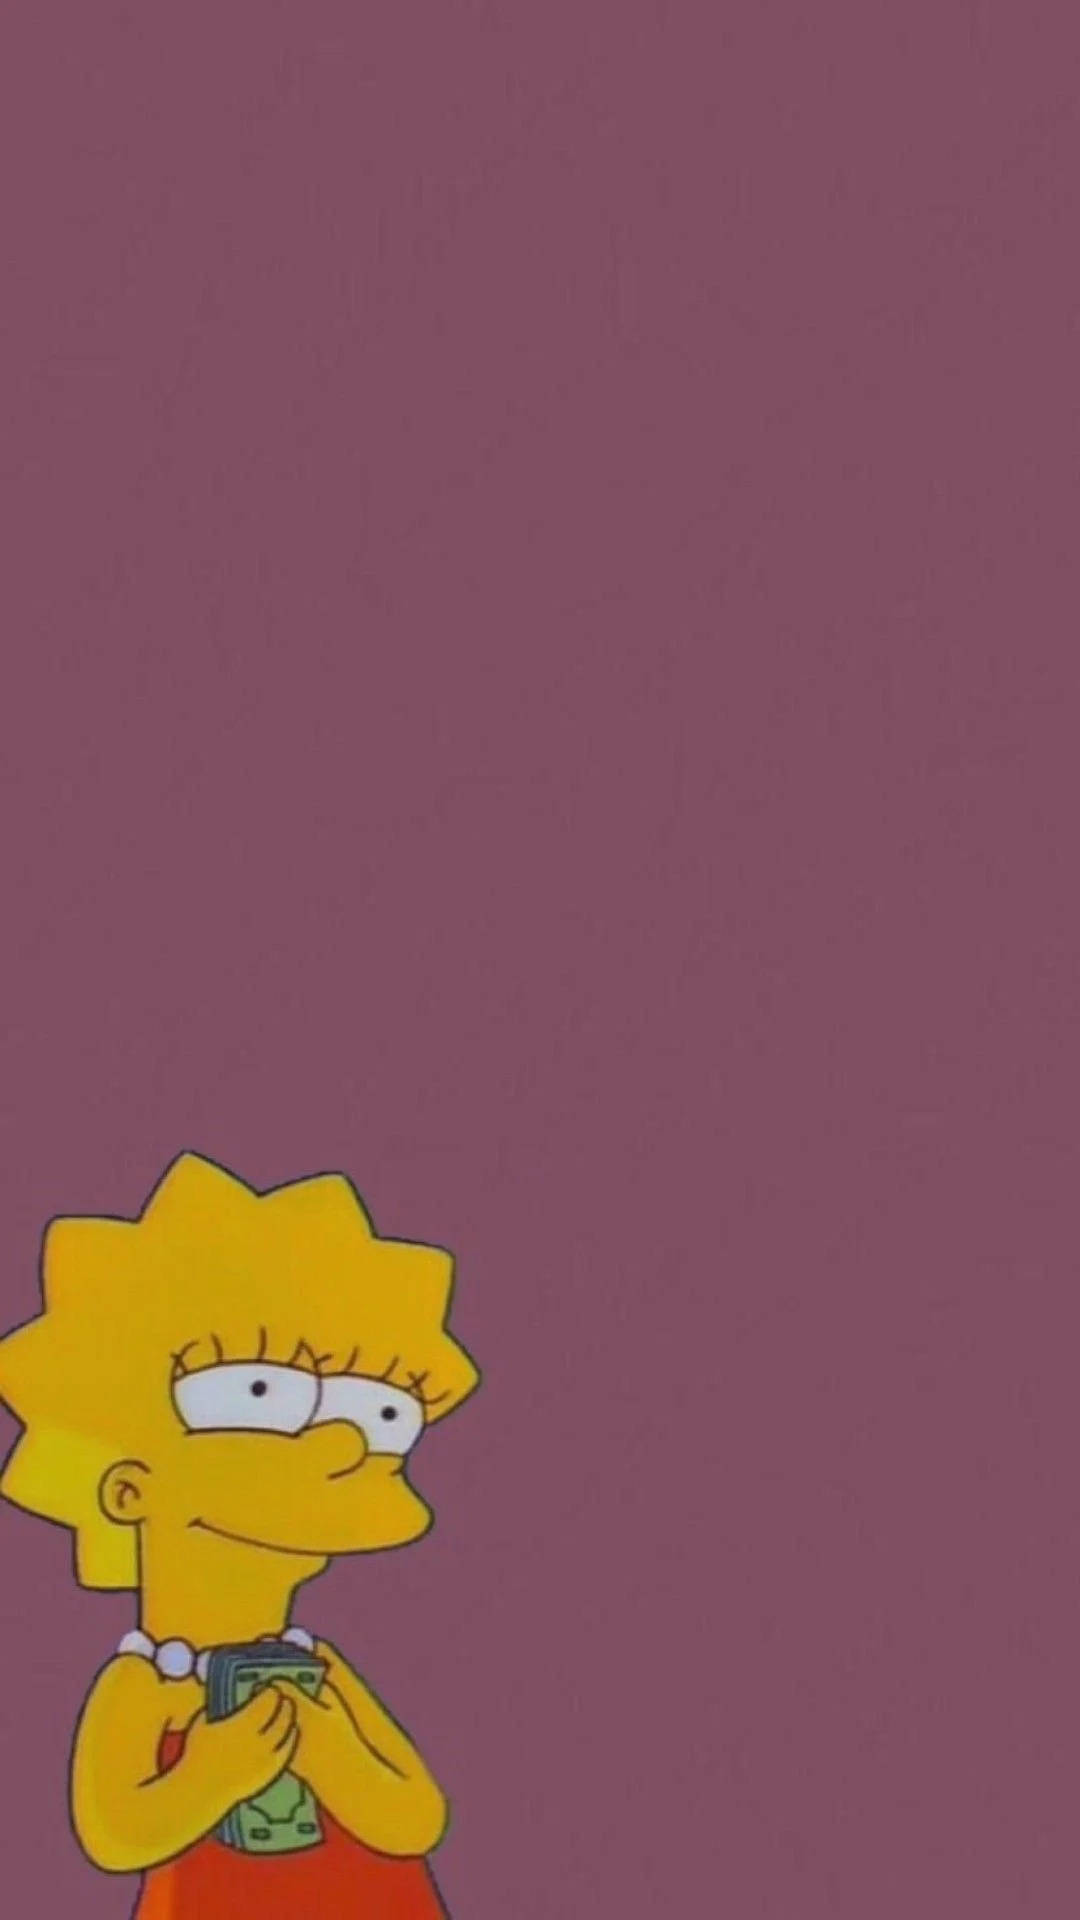 Aesthetic Cartoon Lisa Simpson With Money Background